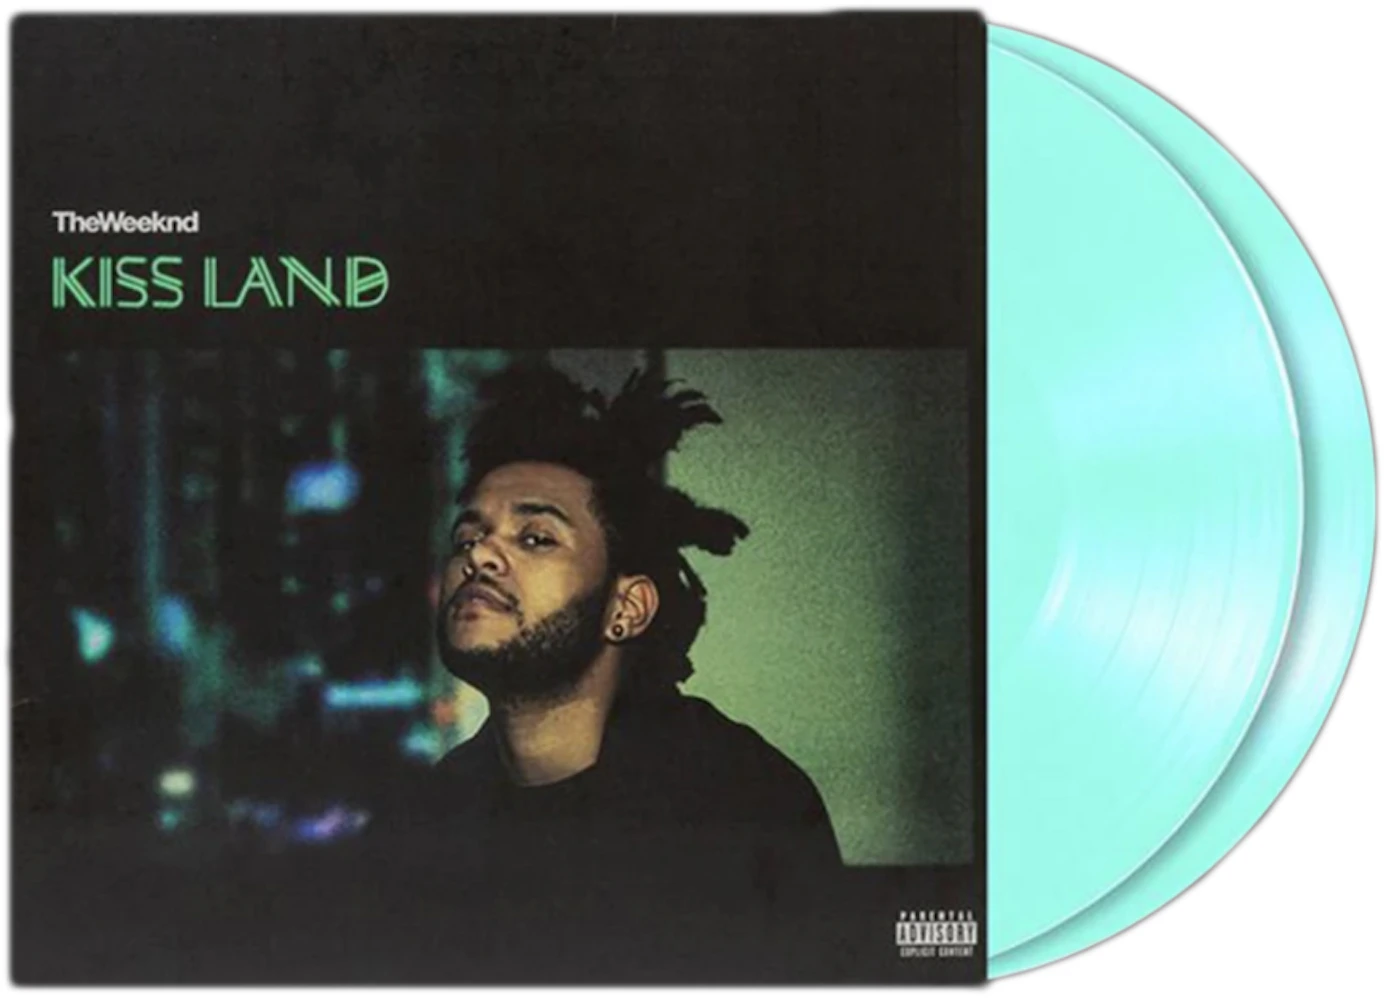 Vinile The Weeknd Kiss Land Limited Edition 2XLP verde trasparente - IT